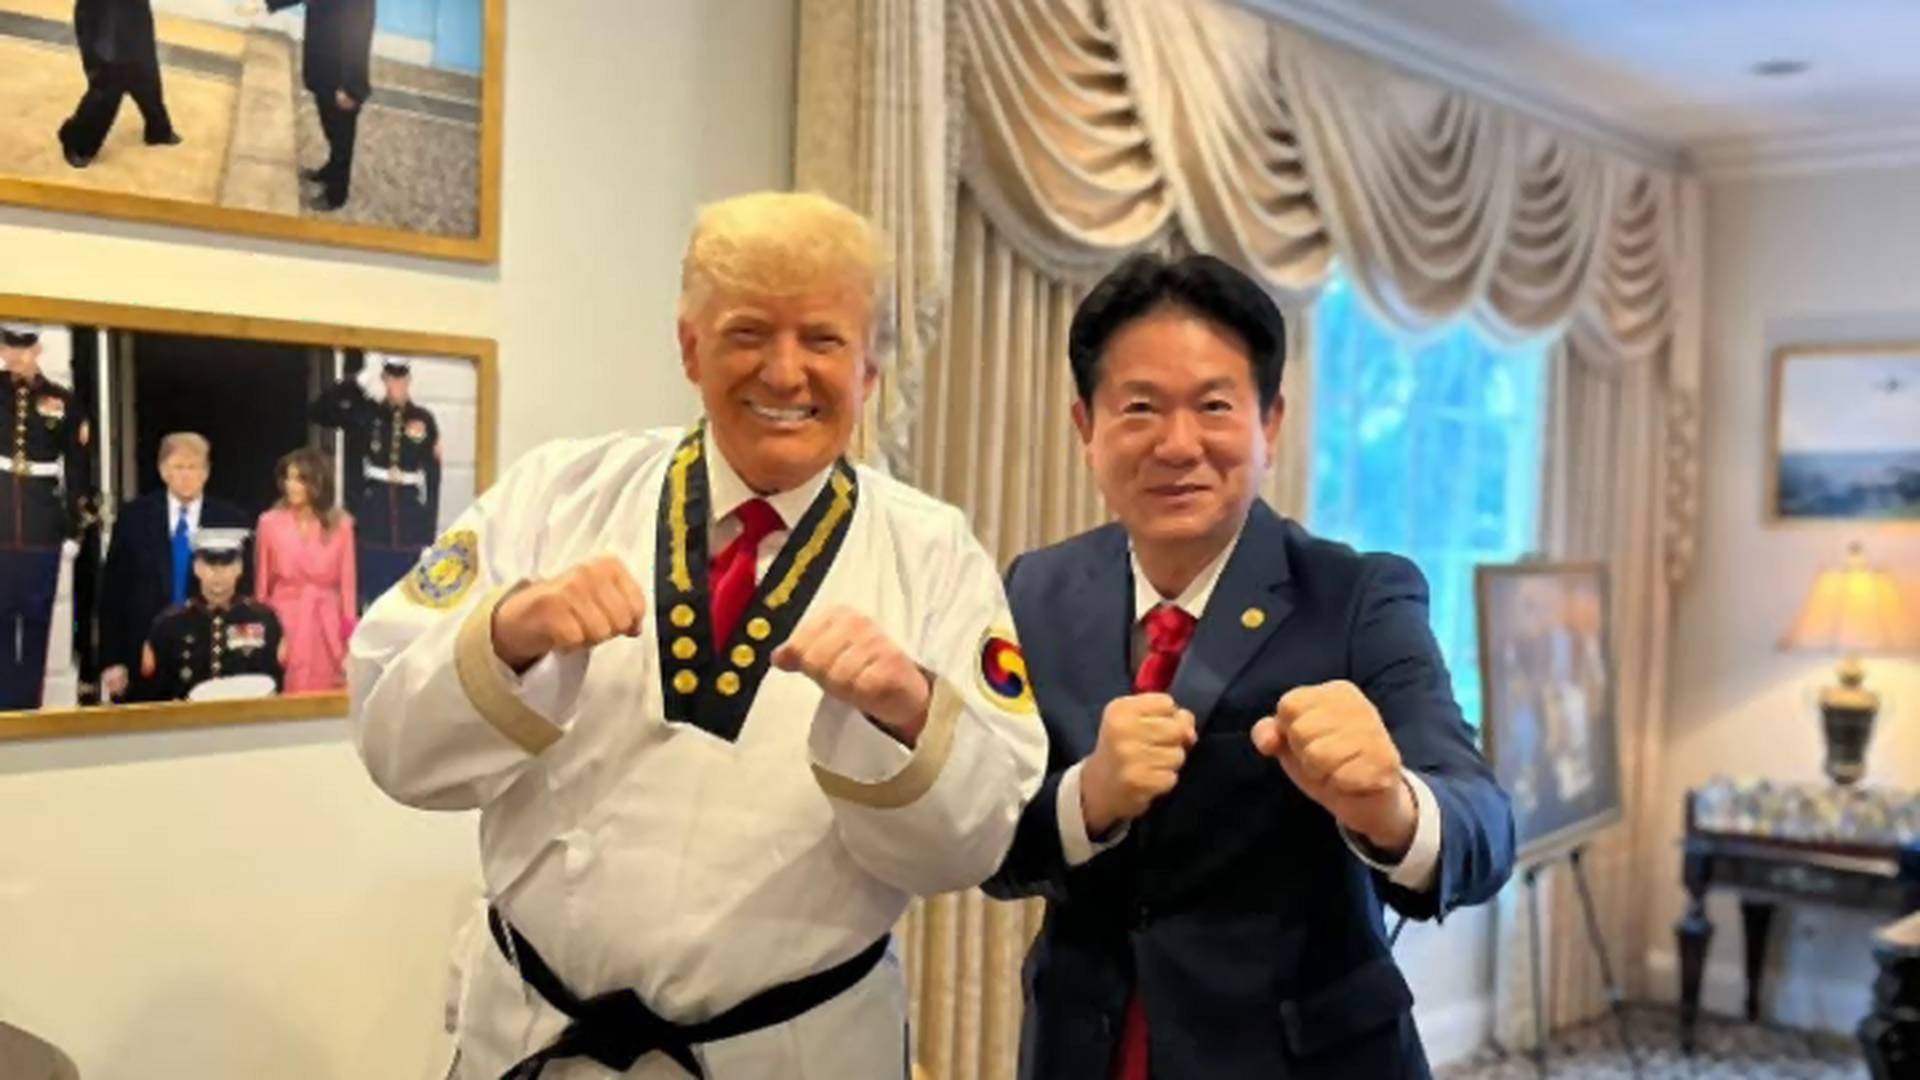 Fekete öves taekwondo mester lett Donald Trump